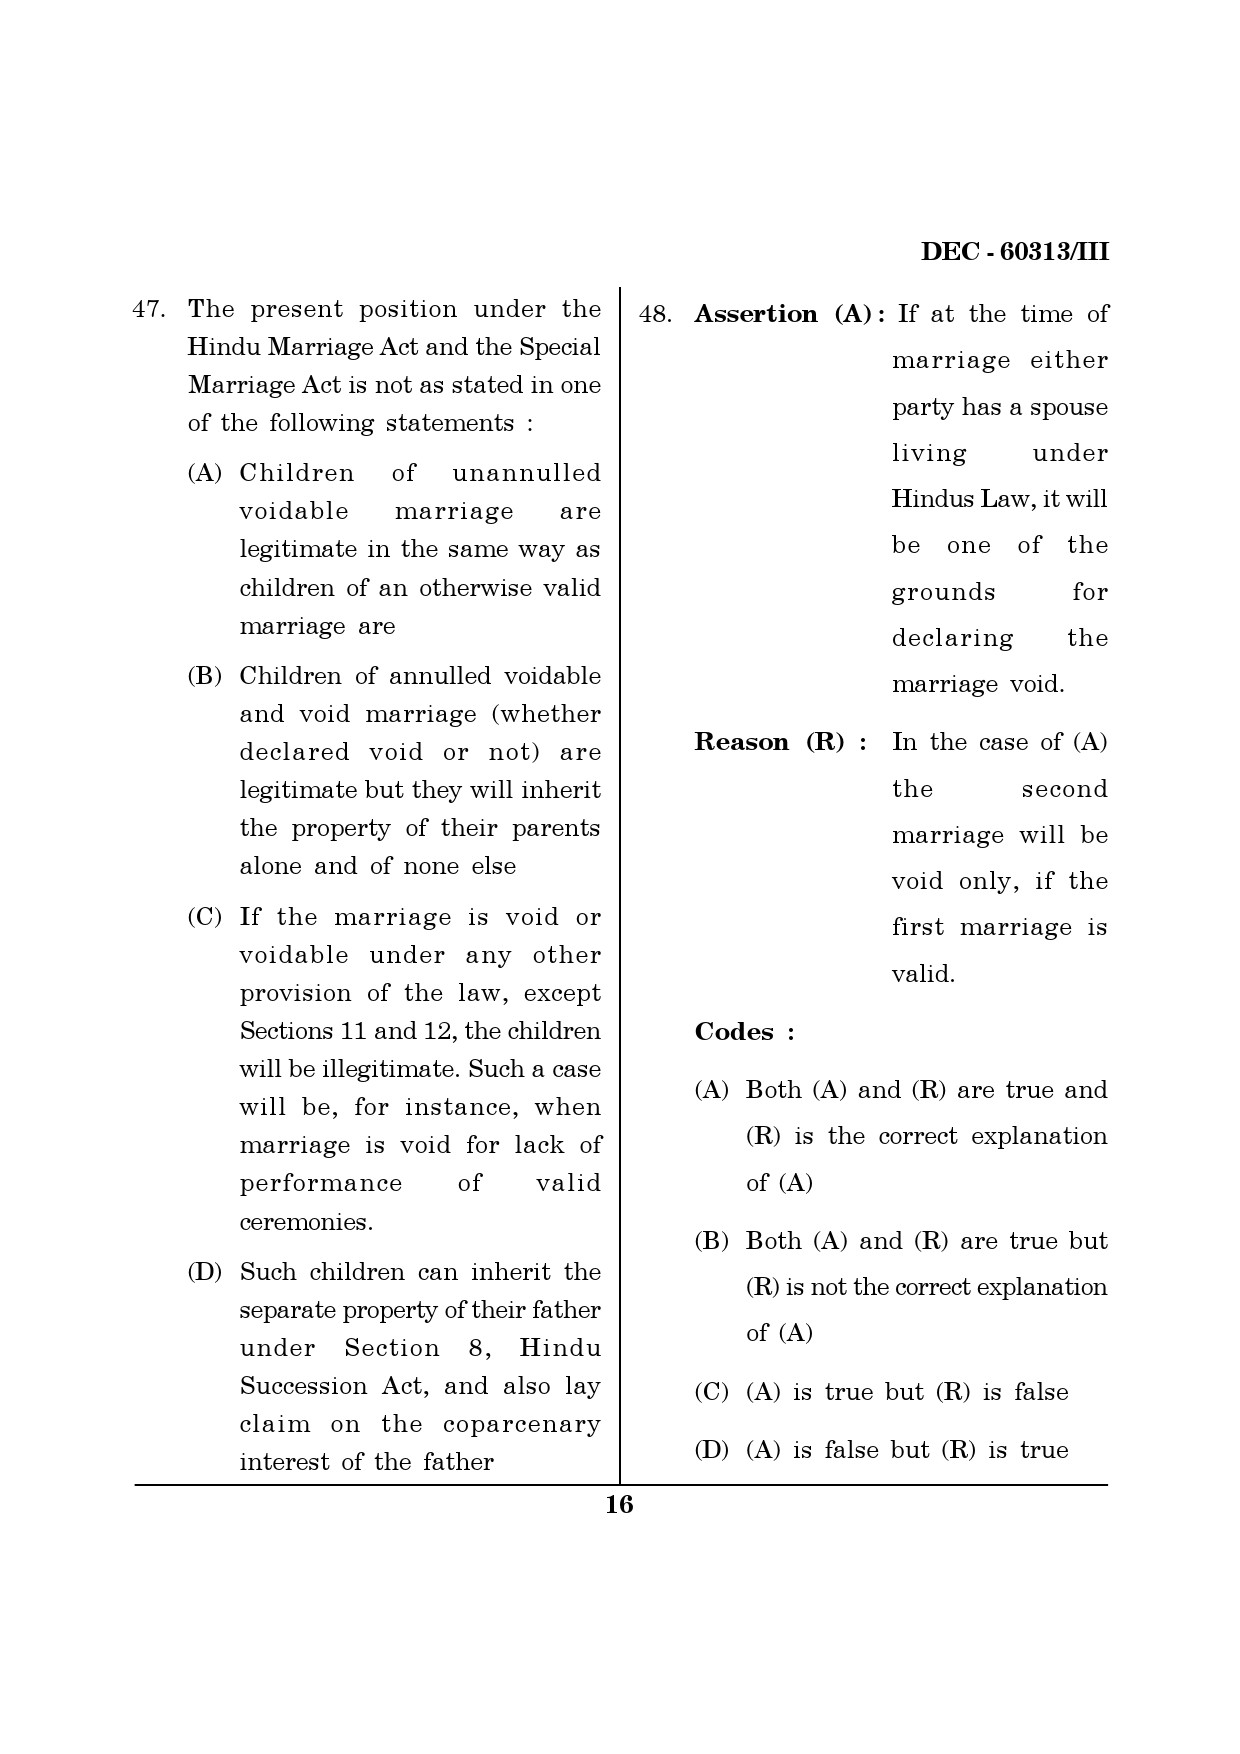 Maharashtra SET Law Question Paper III December 2013 15